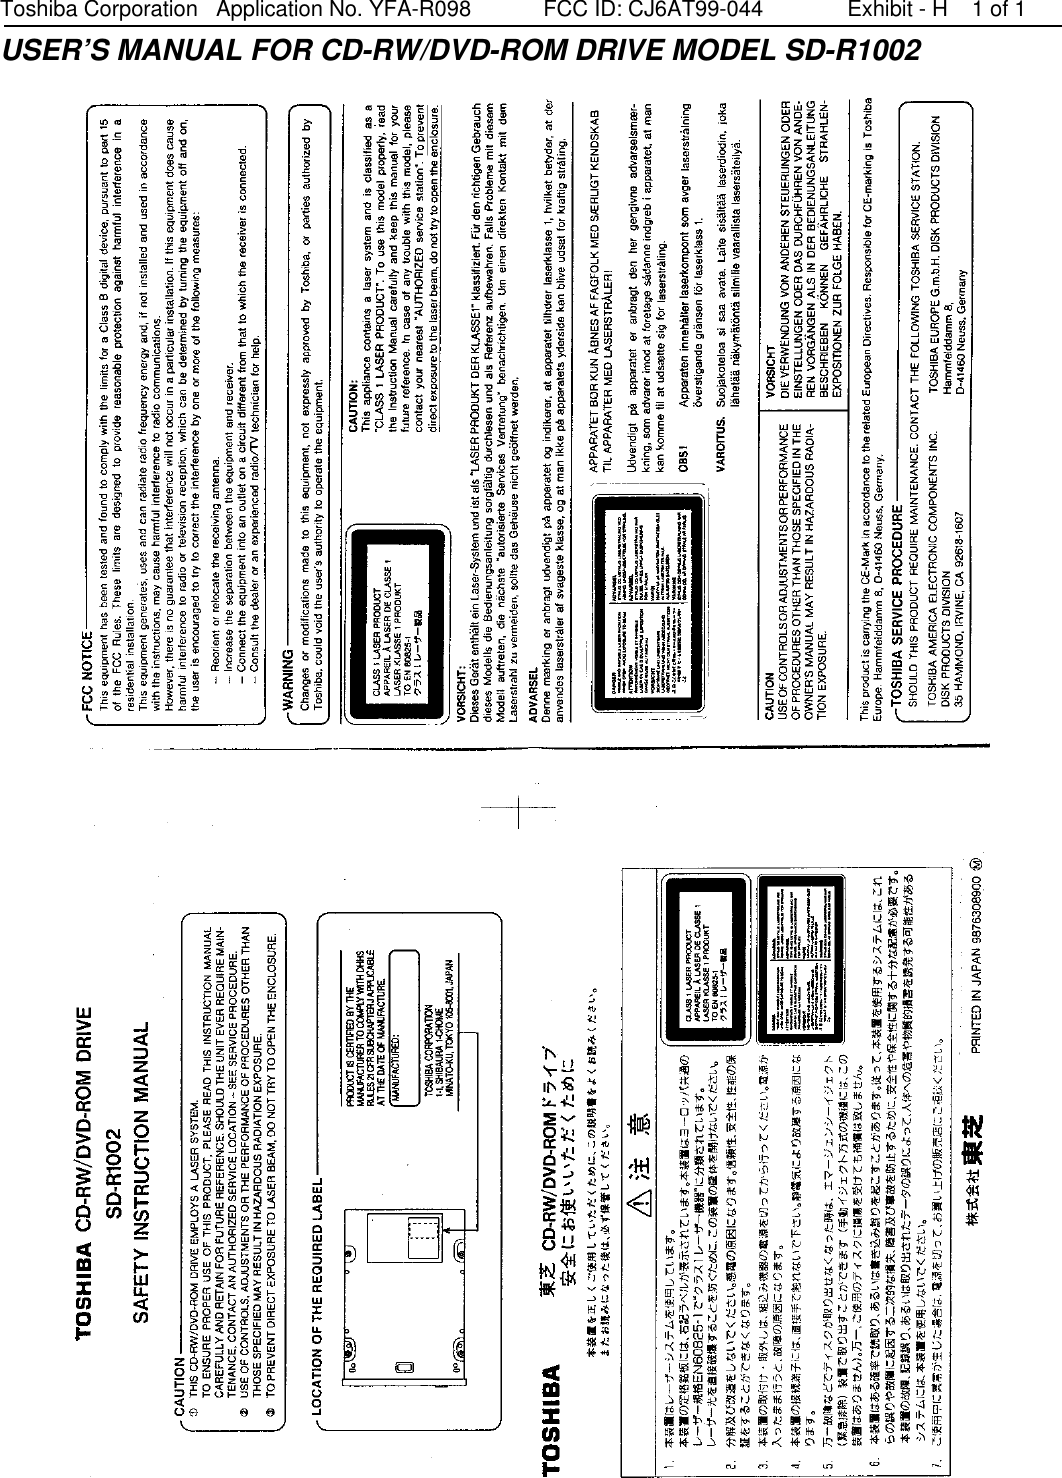 Toshiba Corporation   Application No. YFA-R098            FCC ID: CJ6AT99-044              Exhibit - H    1 of 1 USER’S MANUAL FOR CD-RW/DVD-ROM DRIVE MODEL SD-R1002